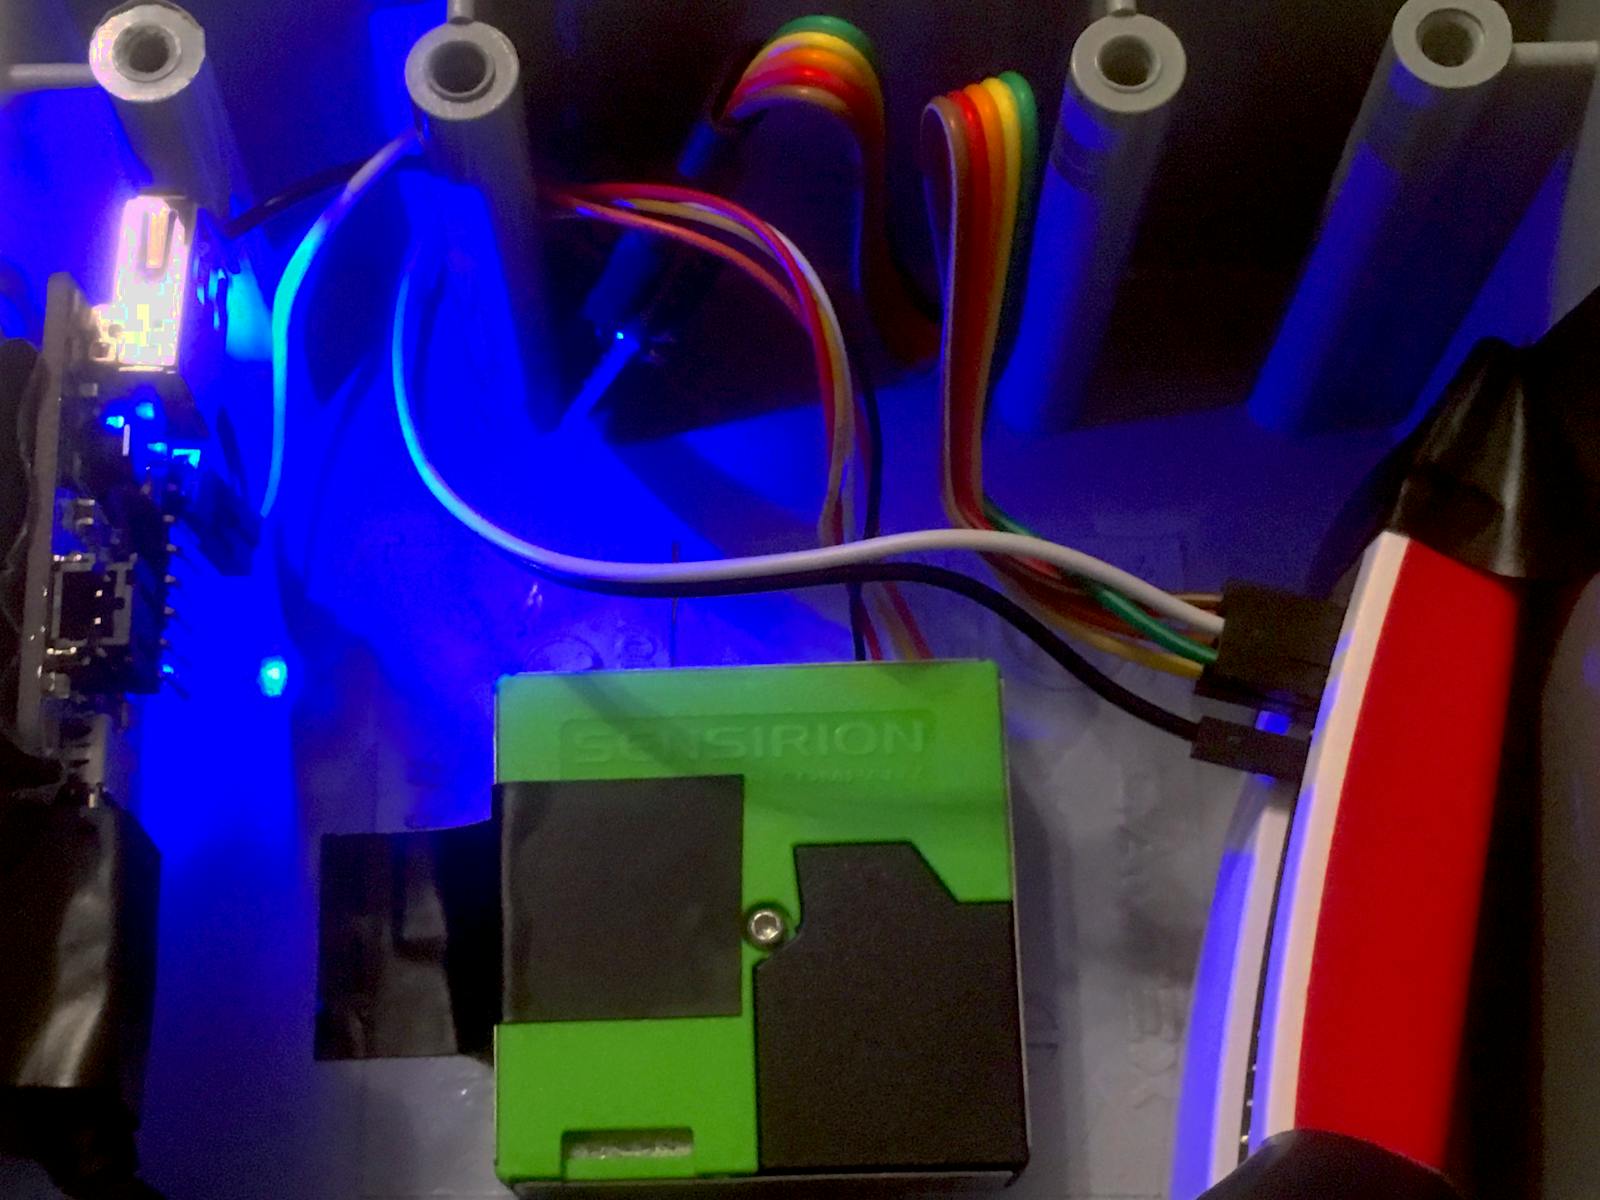 Arduino vs Raspberry Pi: A Maker's Guide to Environmental Sensors - LTER